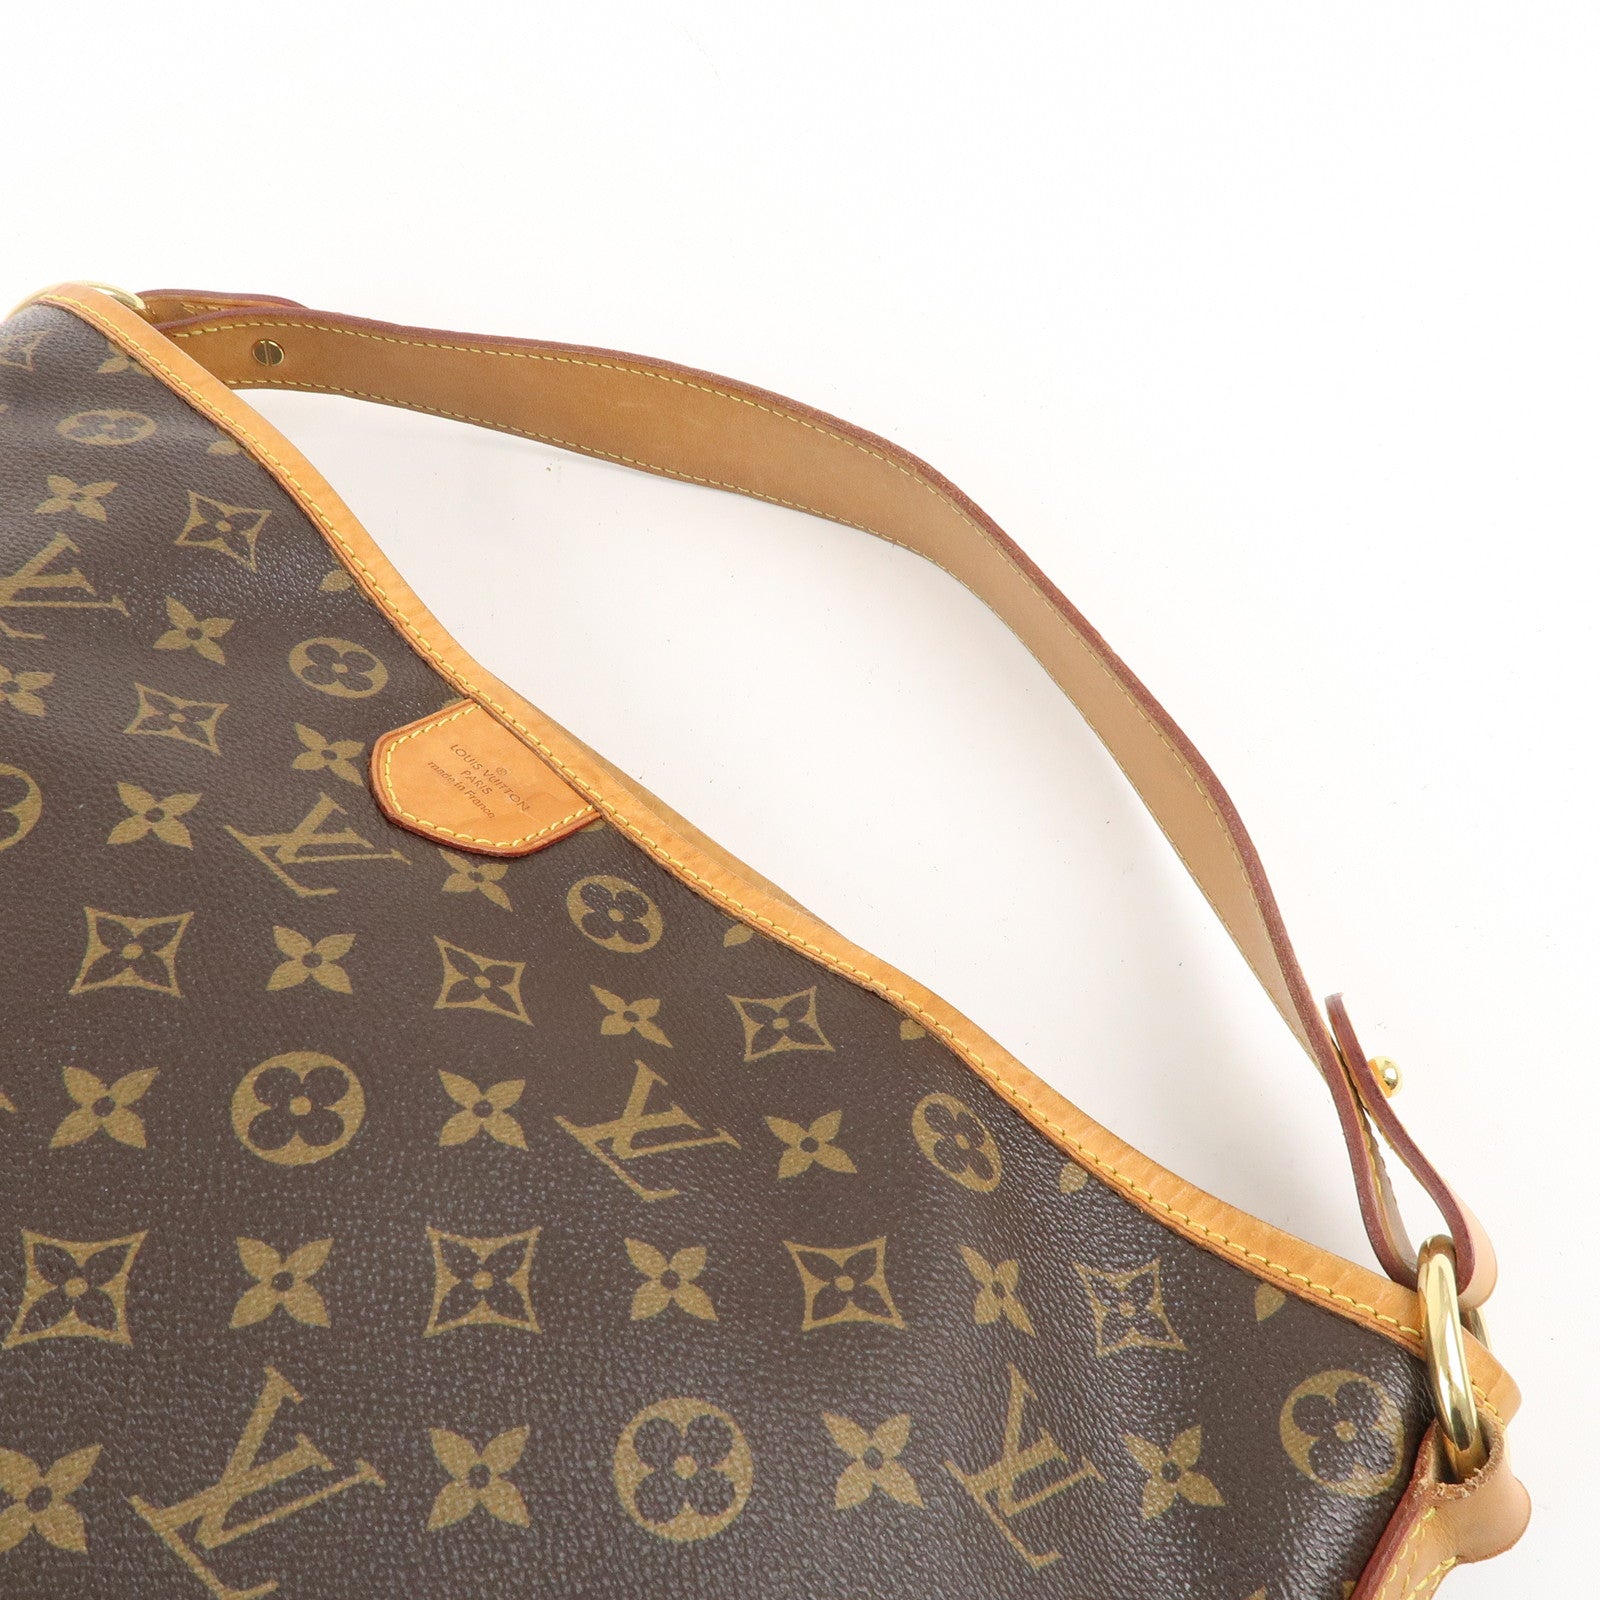 Louis Vuitton, Bags, Beautiful Louis Vuitton Monogram Delightful Pm